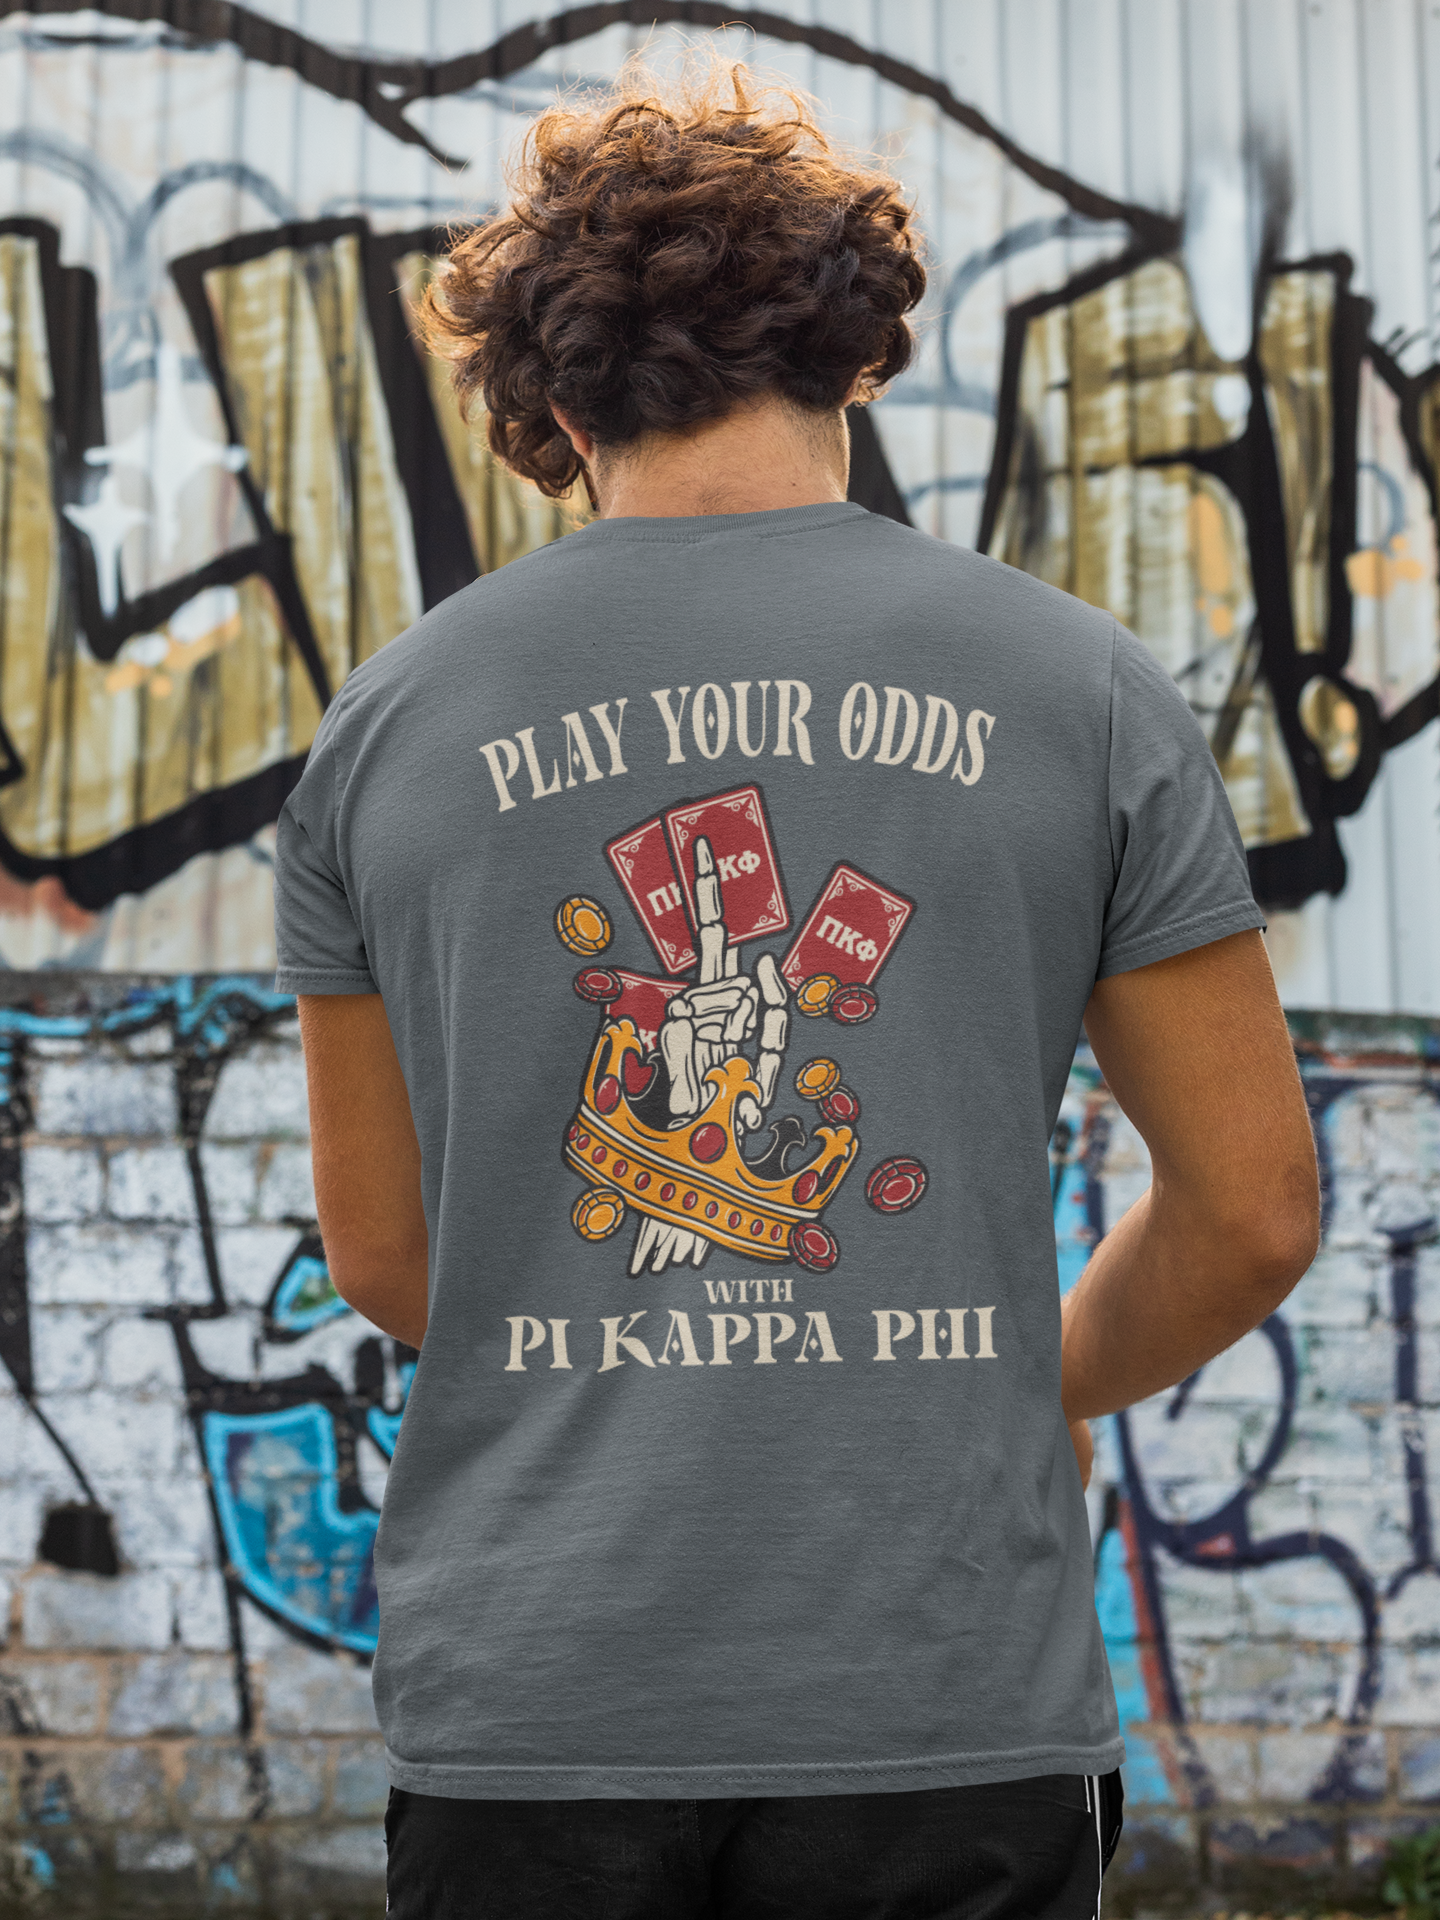 Pi Kappa Phi Graphic T-Shirt | Play Your Odds | Pi Kappa Phi Apparel and Merchandise model 